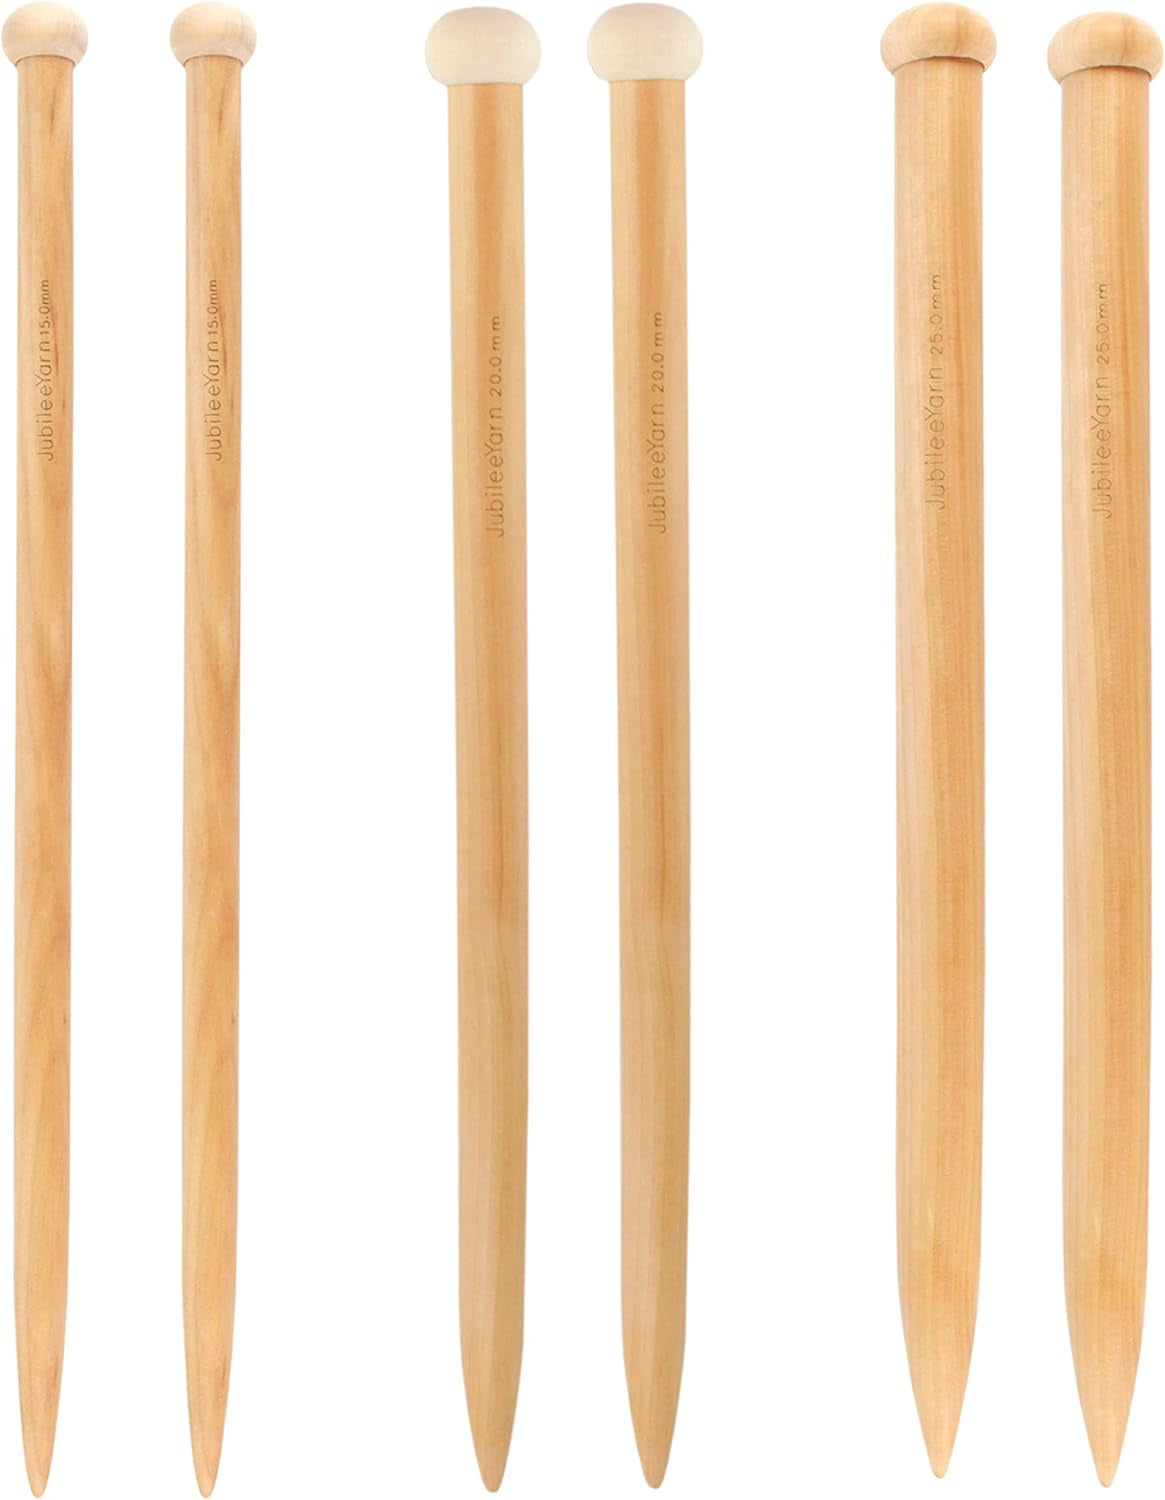 Jubileeyarn Jumbo Bamboo Knitting Needles - US 15 (10Mm) - 16" Long - 1 Pair